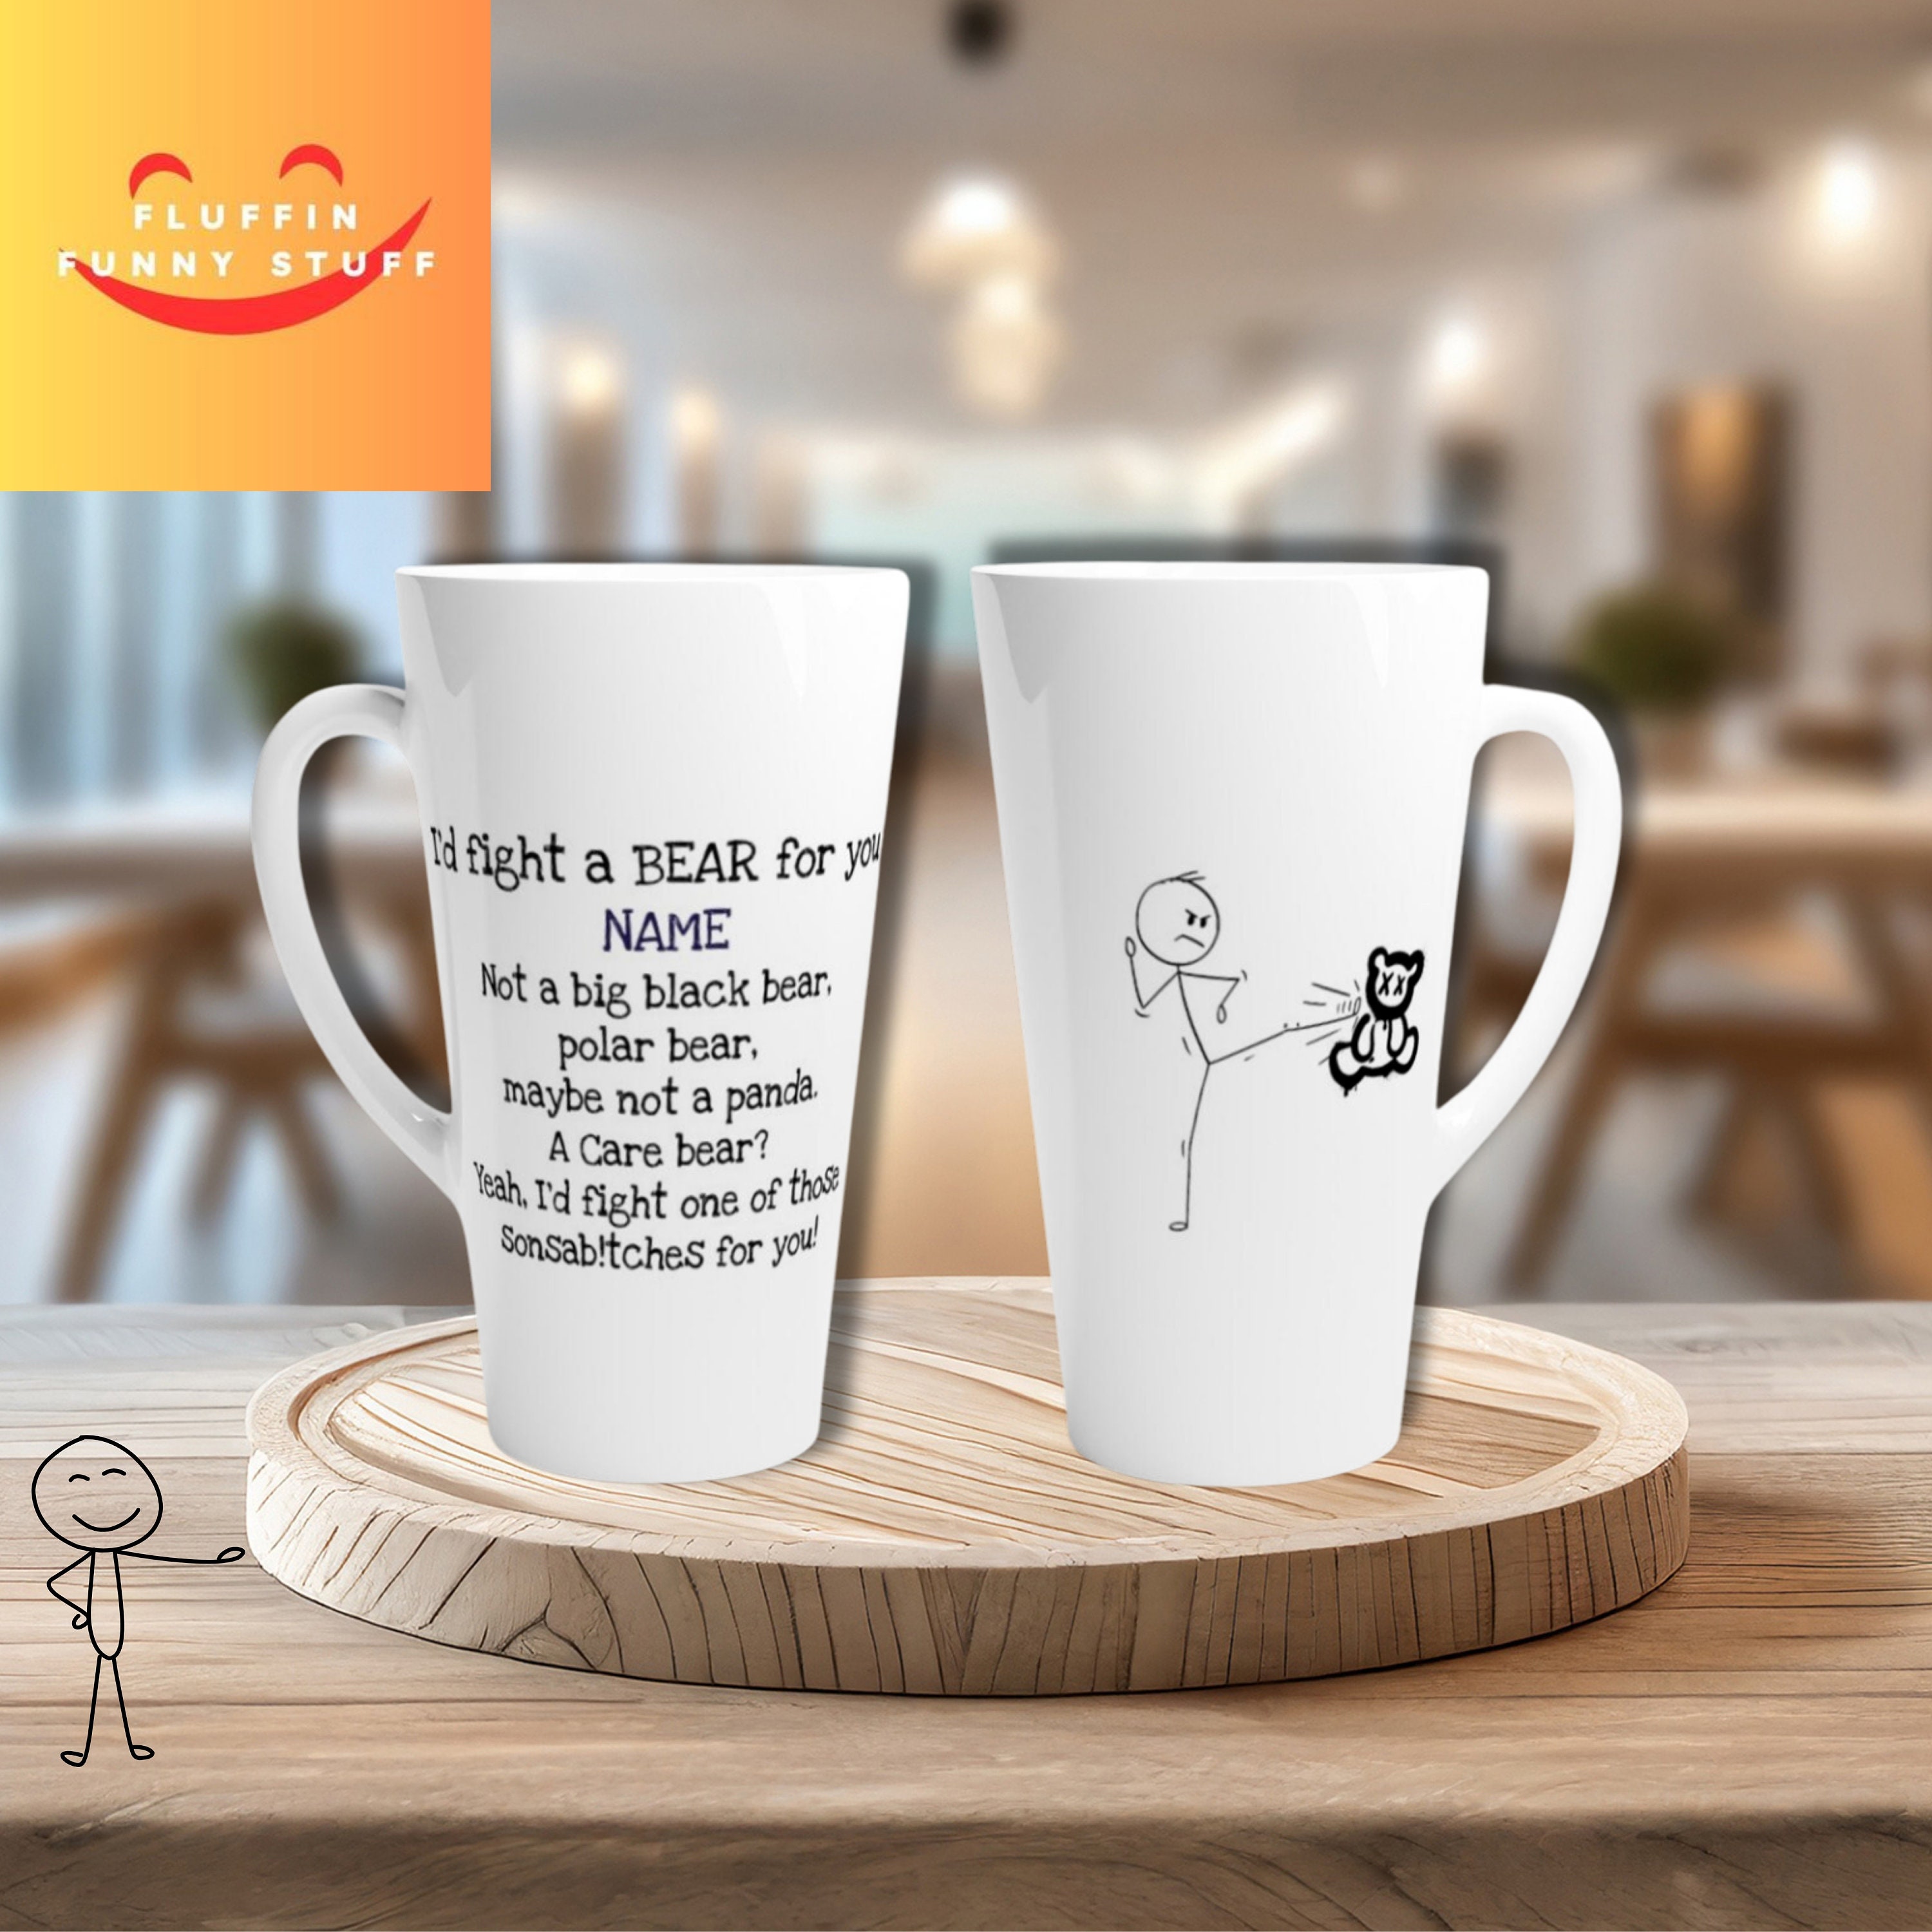 The Polar Espresso Coffee Mug, Coffee Lover Gift, Espresso Mug, the Polar  Express, Coffee Pun, Funny Mug for Her, Gift Idea, Novelty Mug 